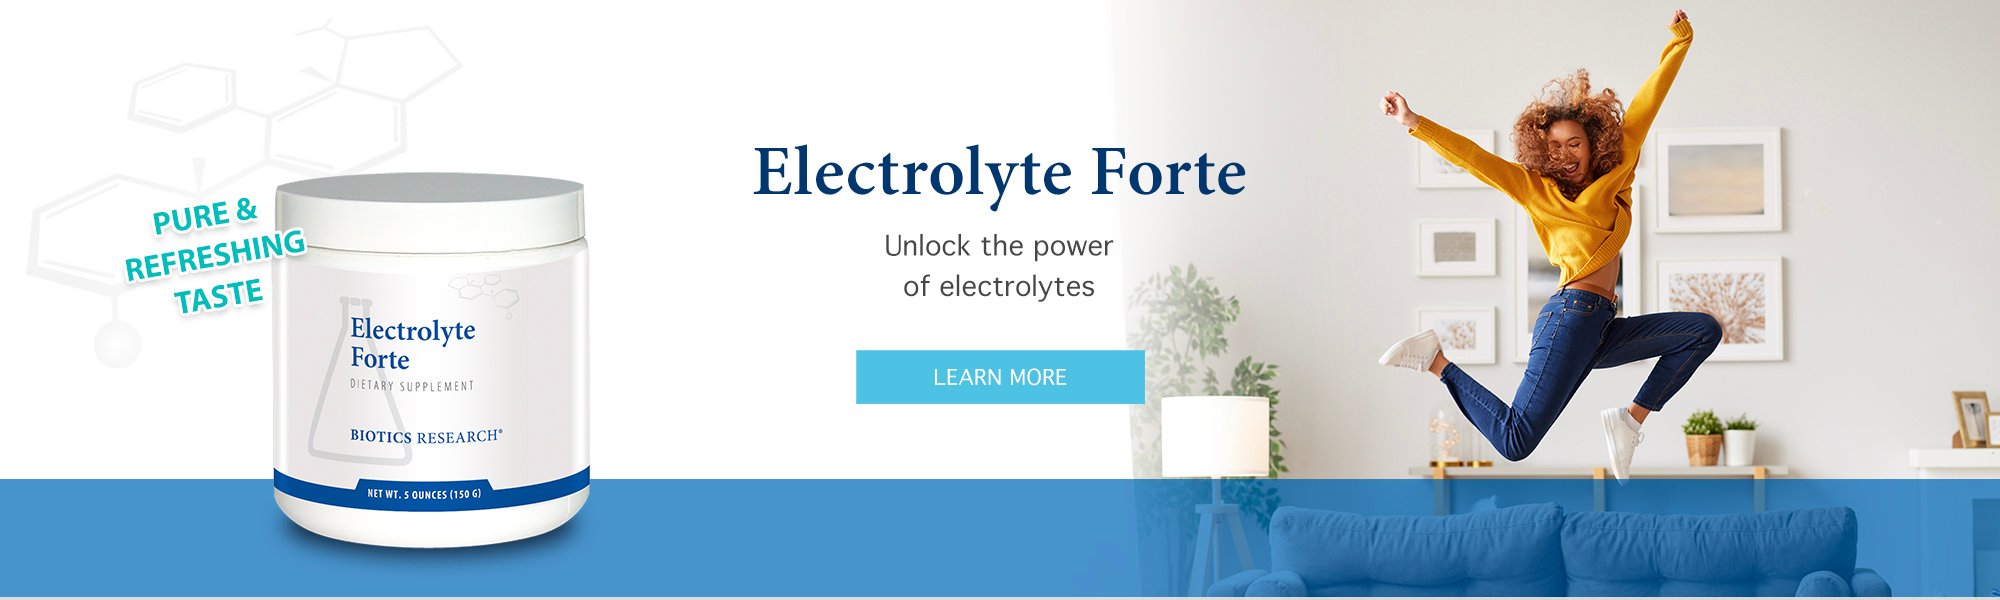 ElectrolyteForte_Banner